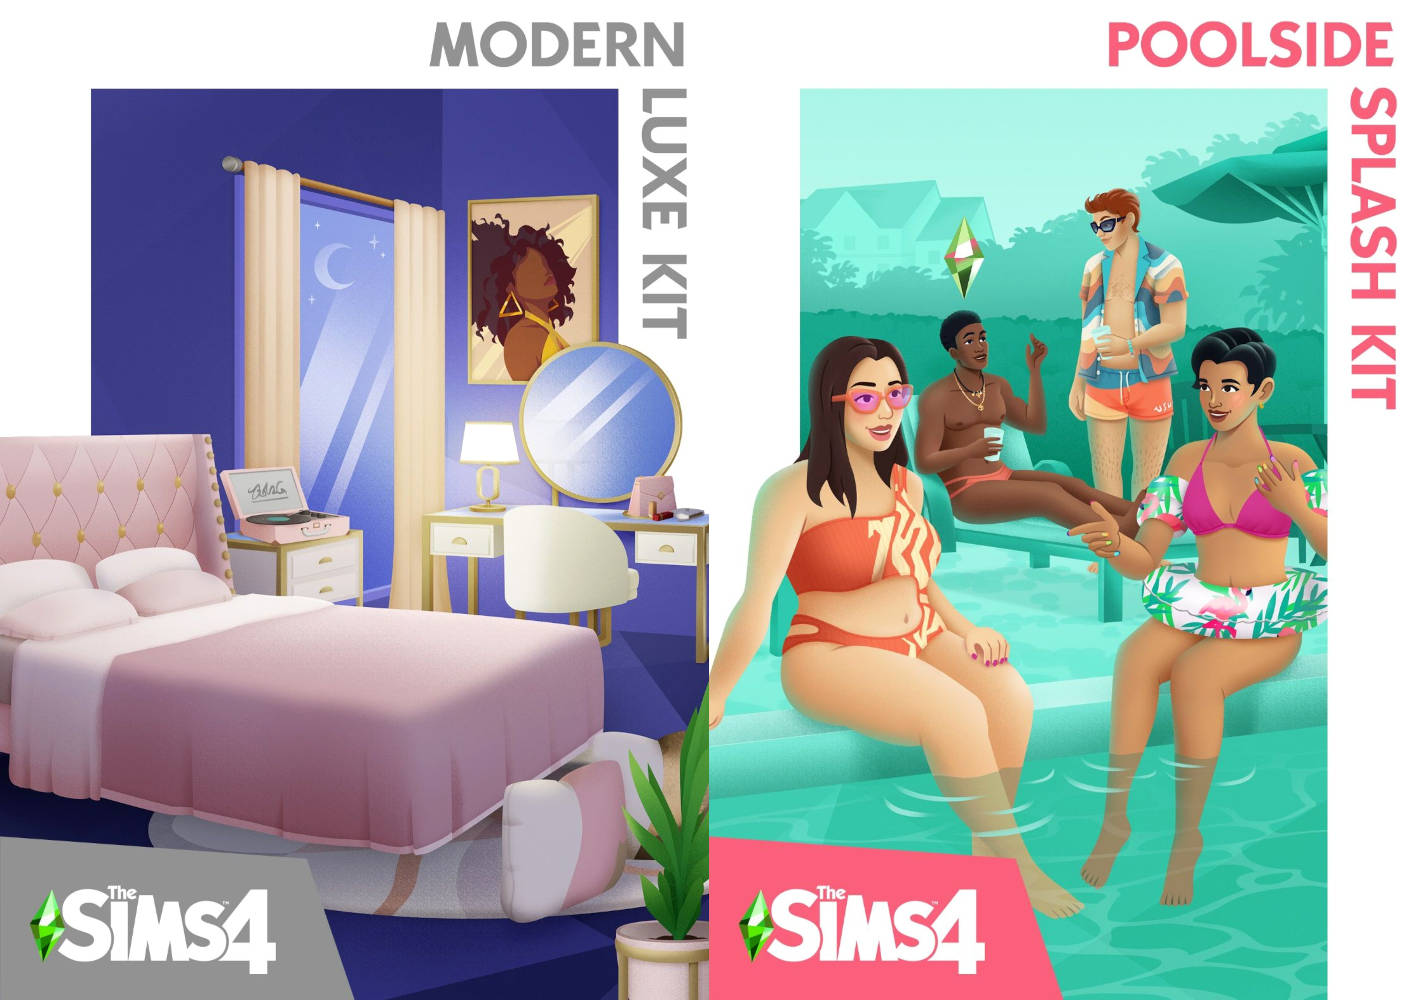 Утечка: The Sims 4 получит комплекты Modern Luxe и Poolside Splash